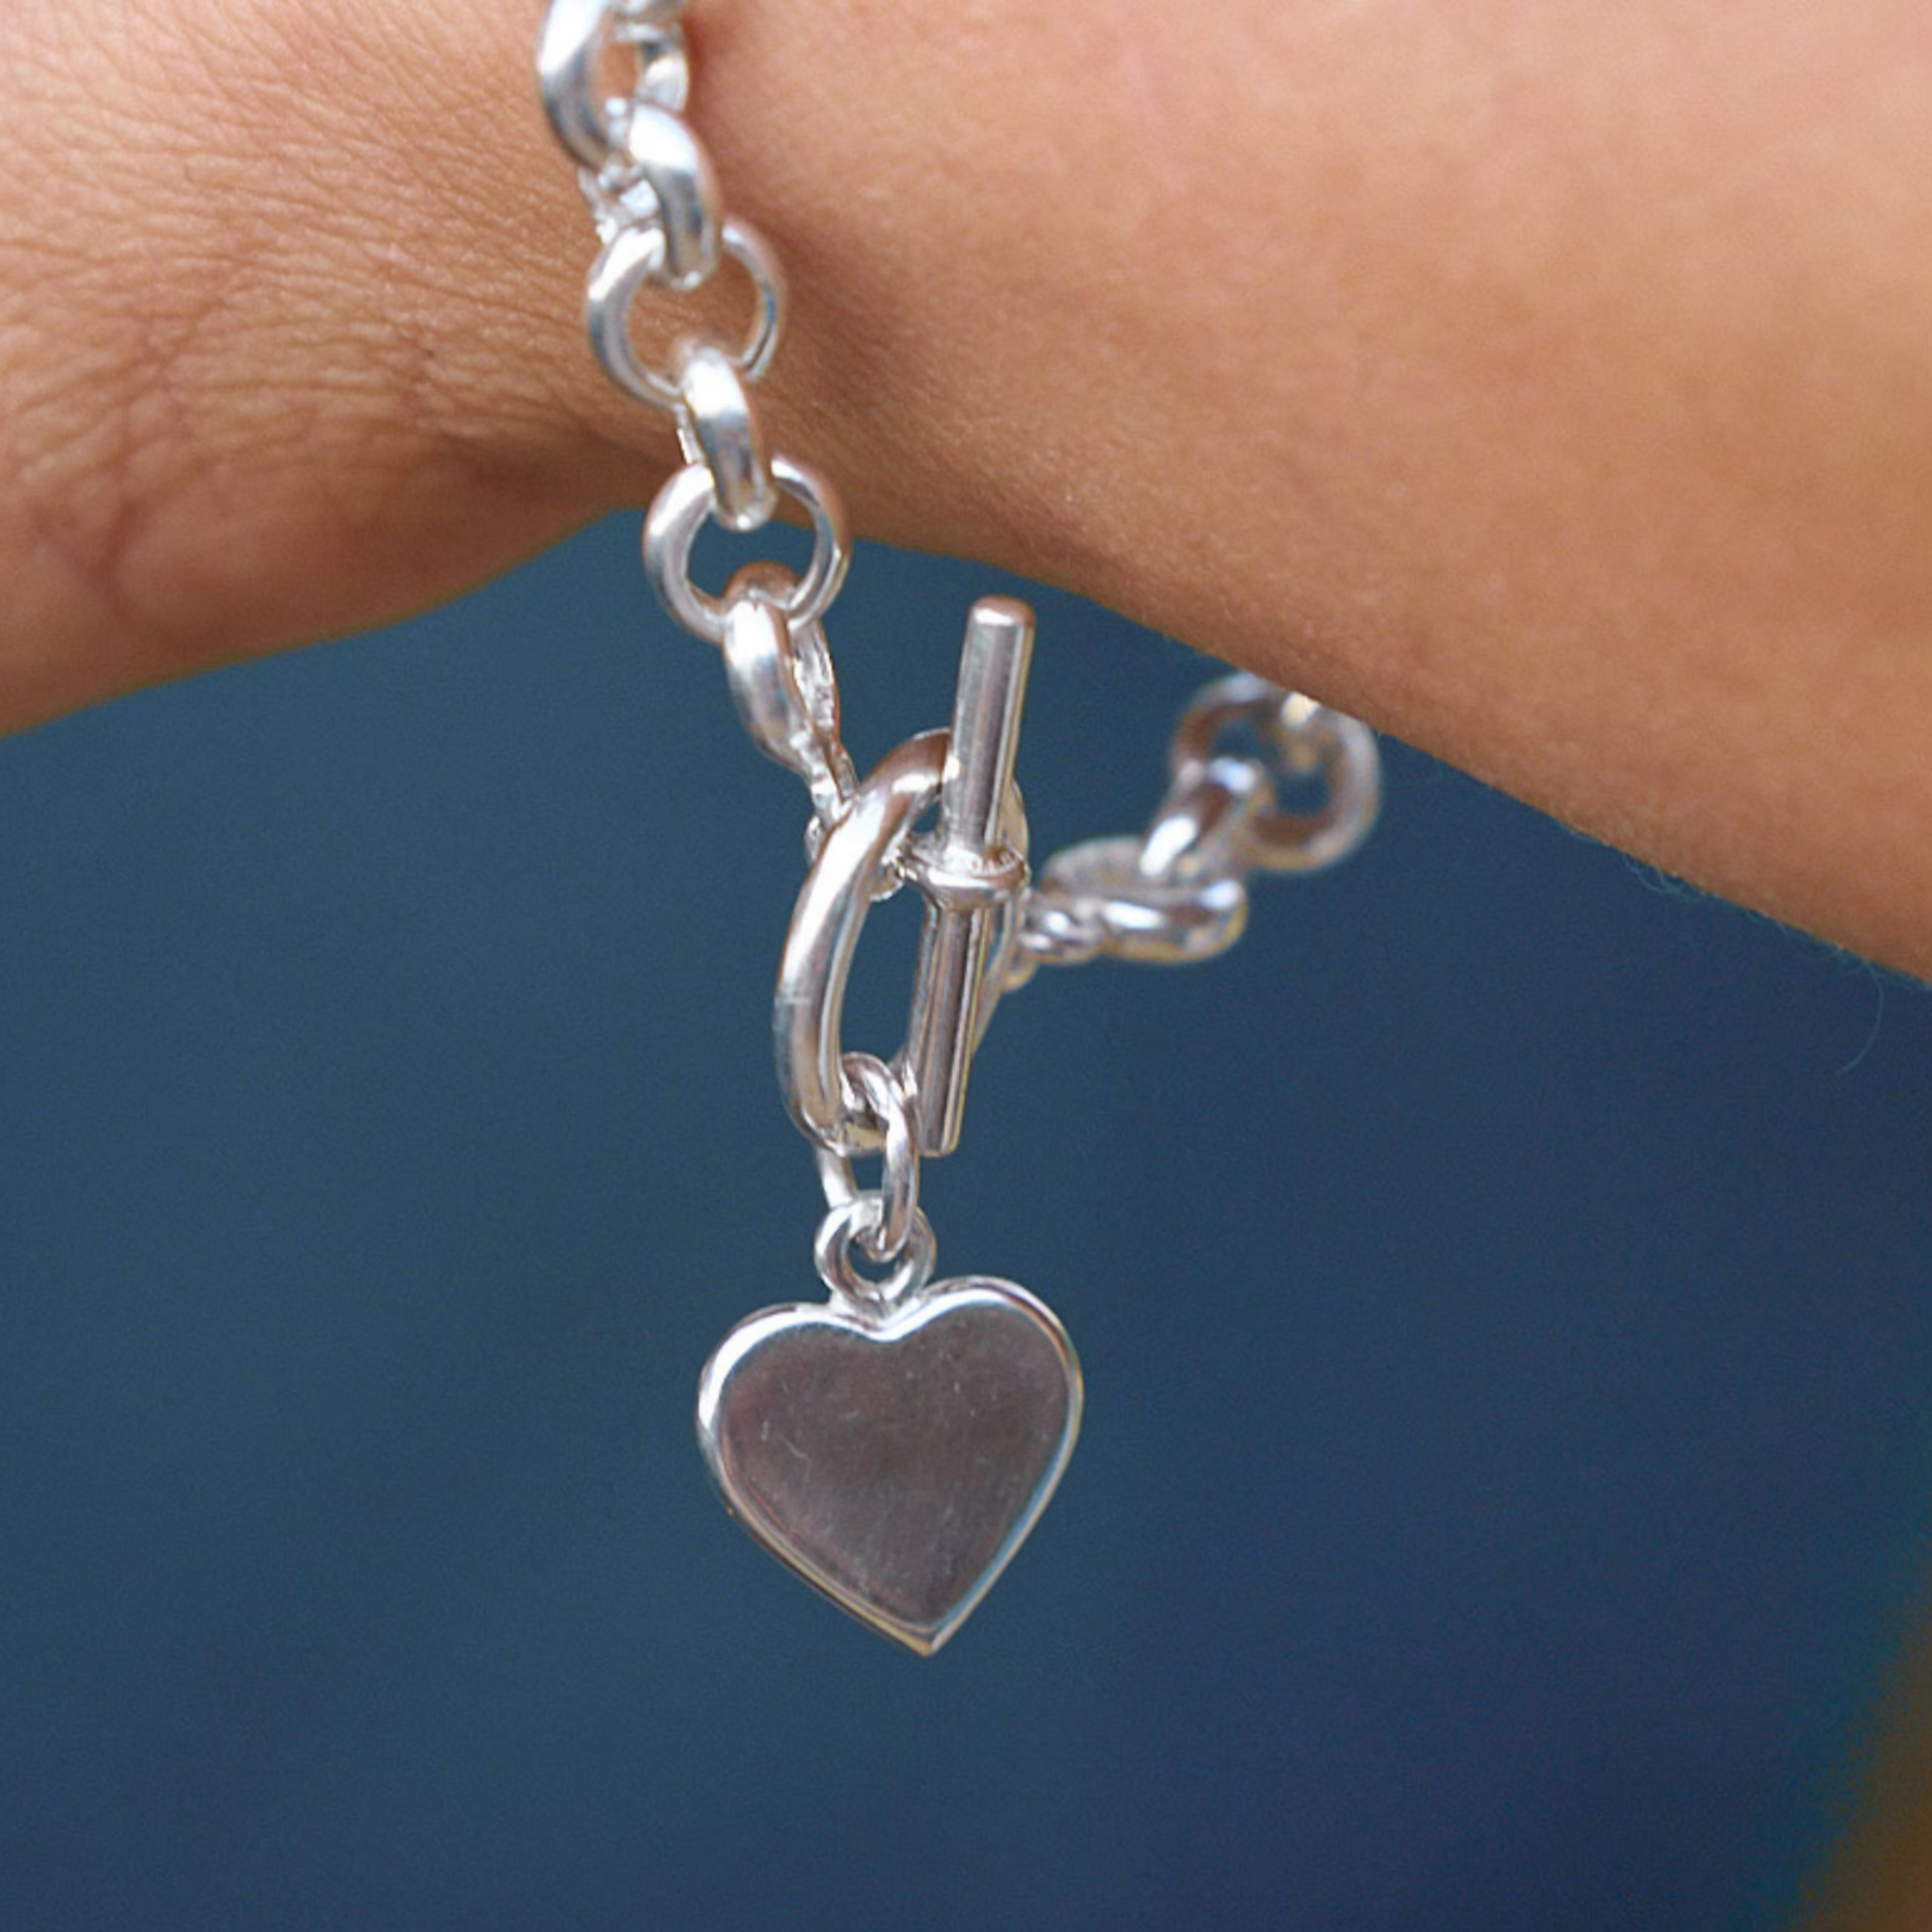 Handmade rolo chain bracelet with a heart charm